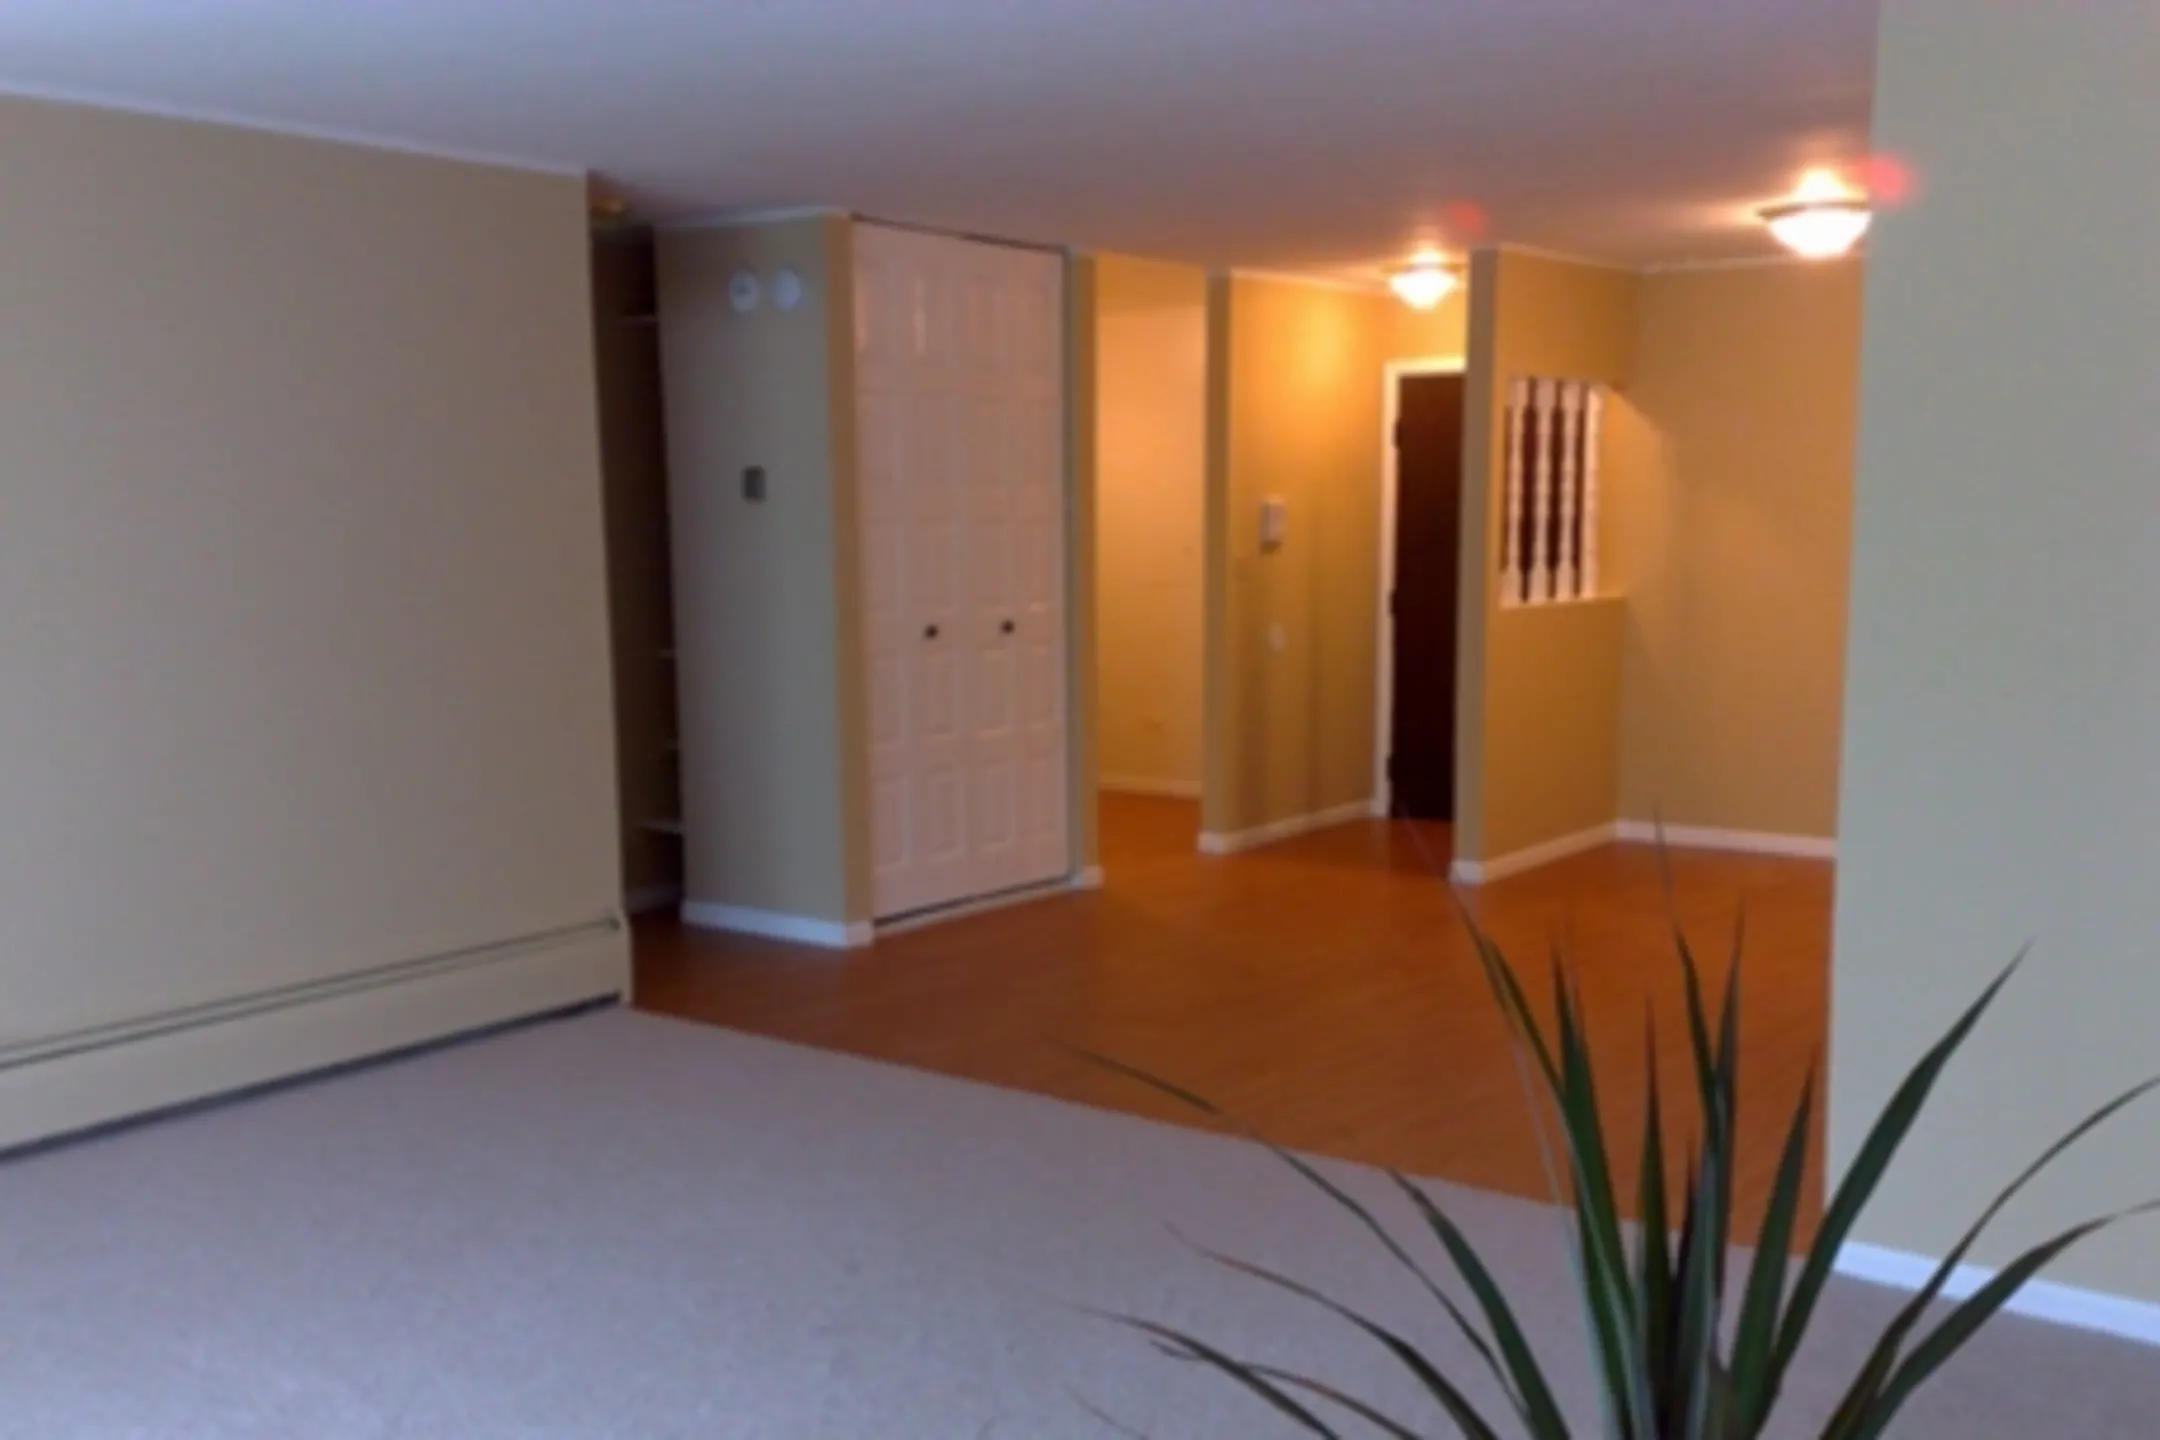 Living Room - Elmwood Apartments - Mundelein, IL